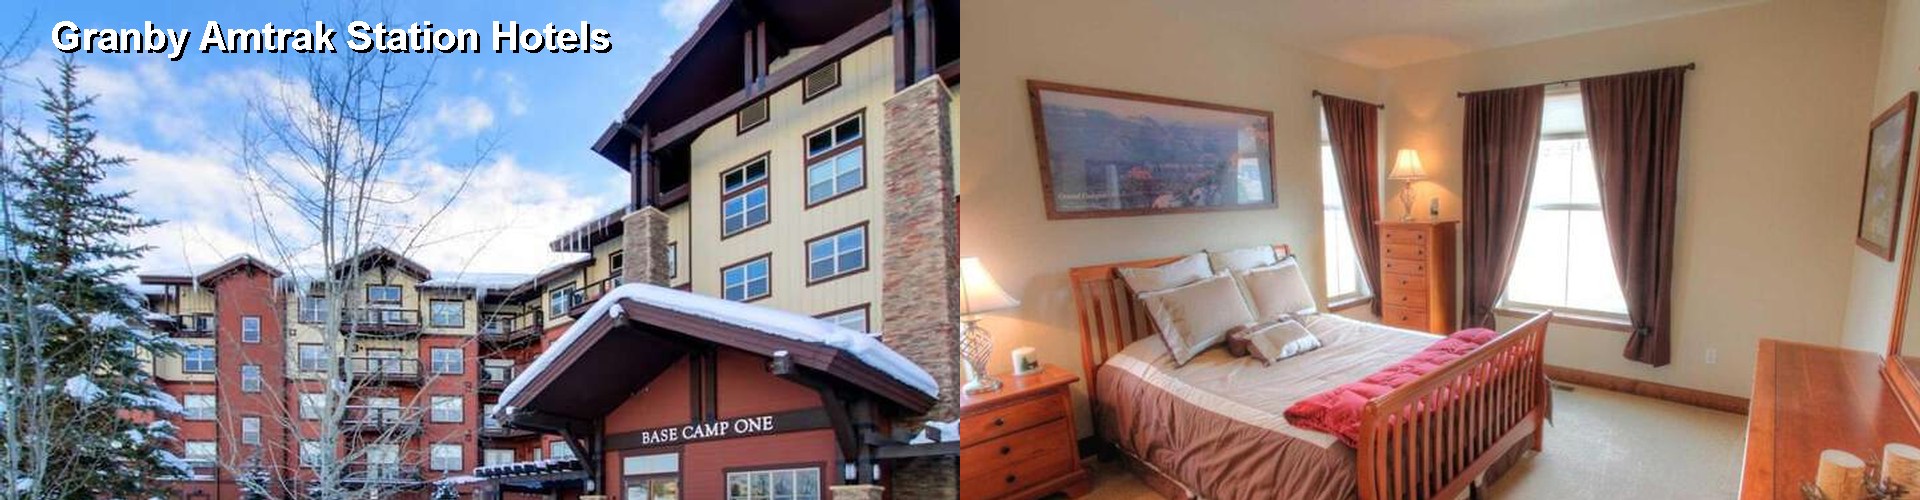 5 Best Hotels near Granby Amtrak Station